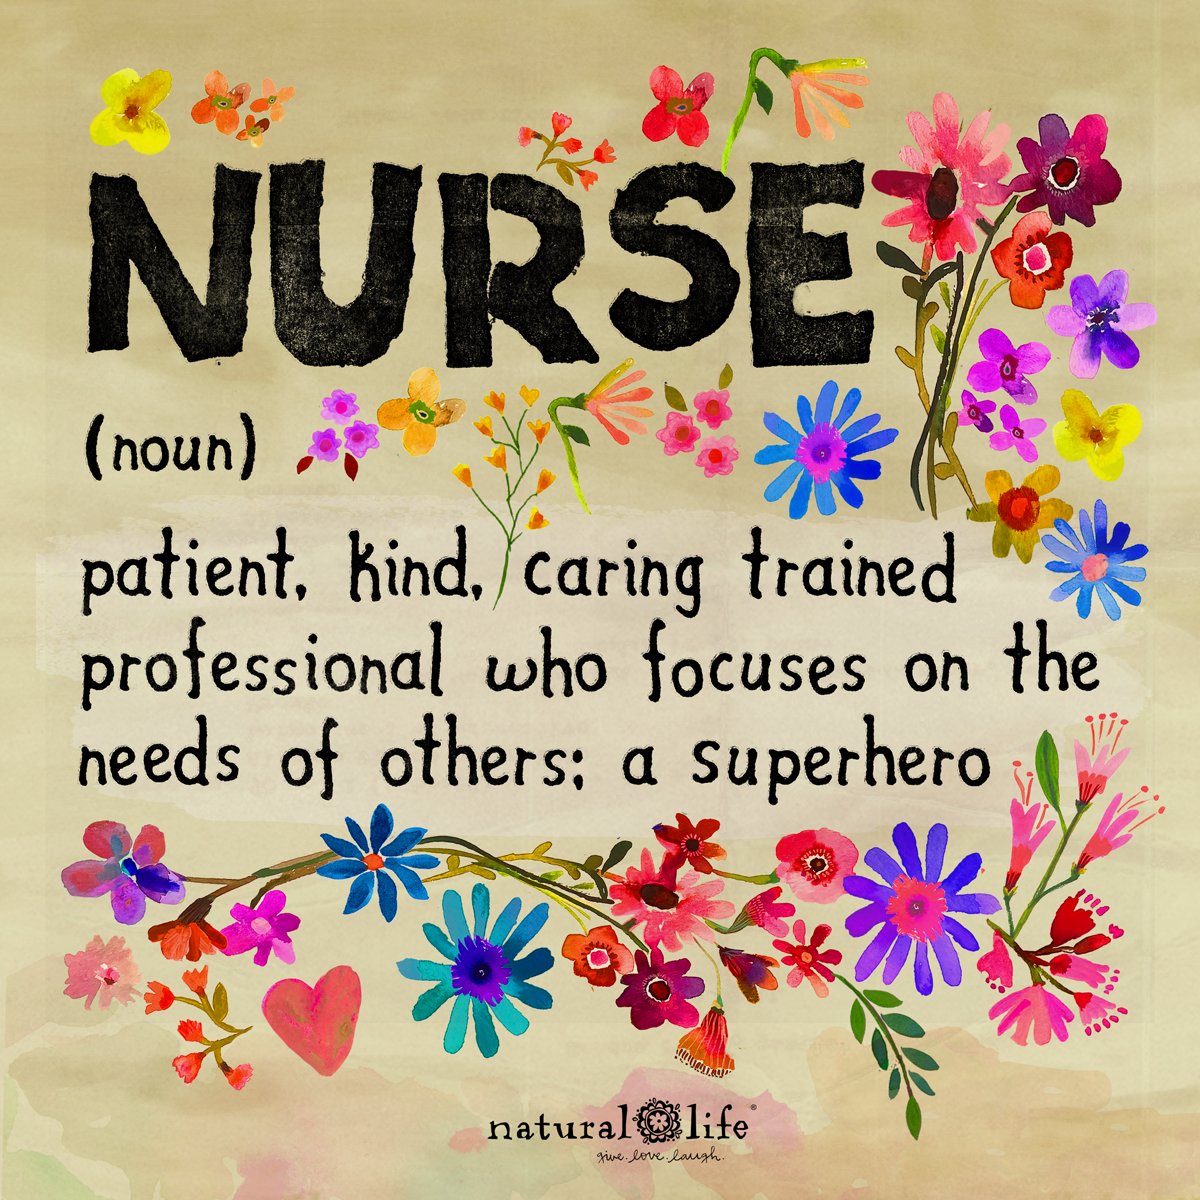 Nurses make the world a better place 🖤 Happy National Nurses Week! We appreciate everything you do! 🩺 Tag your favorite superhero!

#nationalnursesweek #thankyounurses #nursesaresuperheros